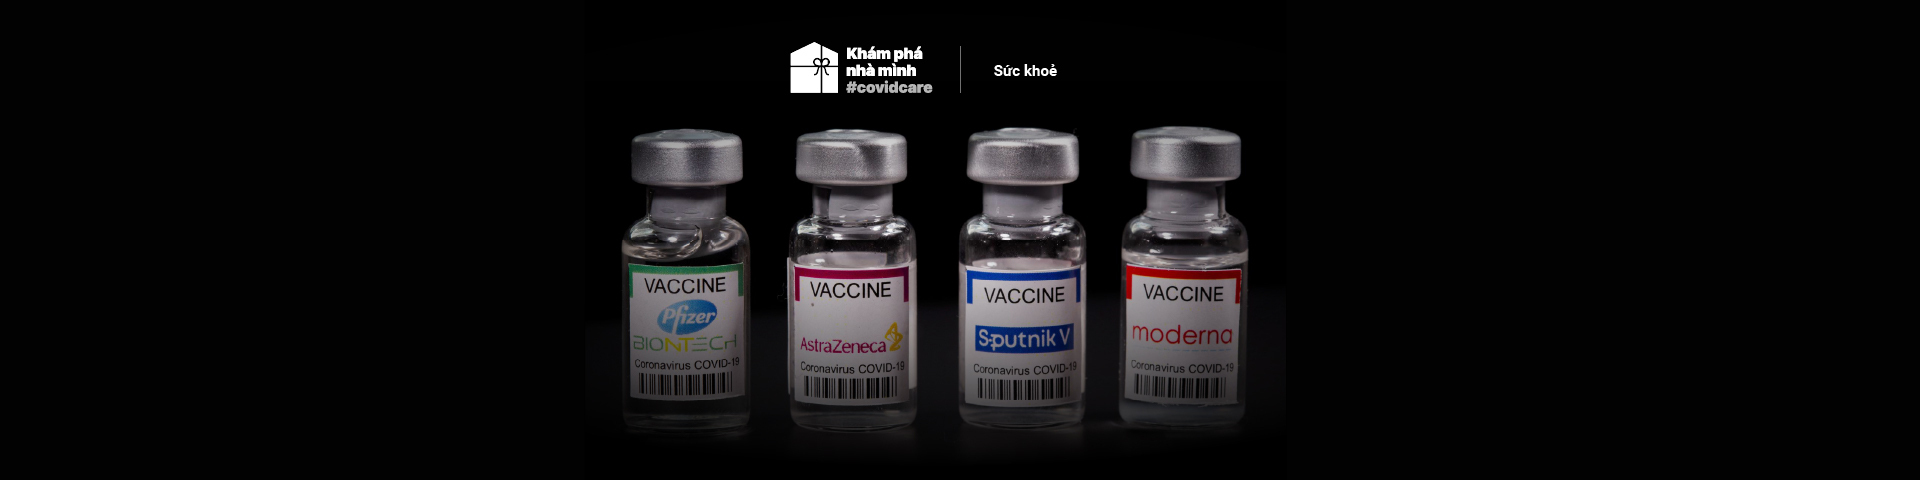 Sự thật về Vaccine Covid-19